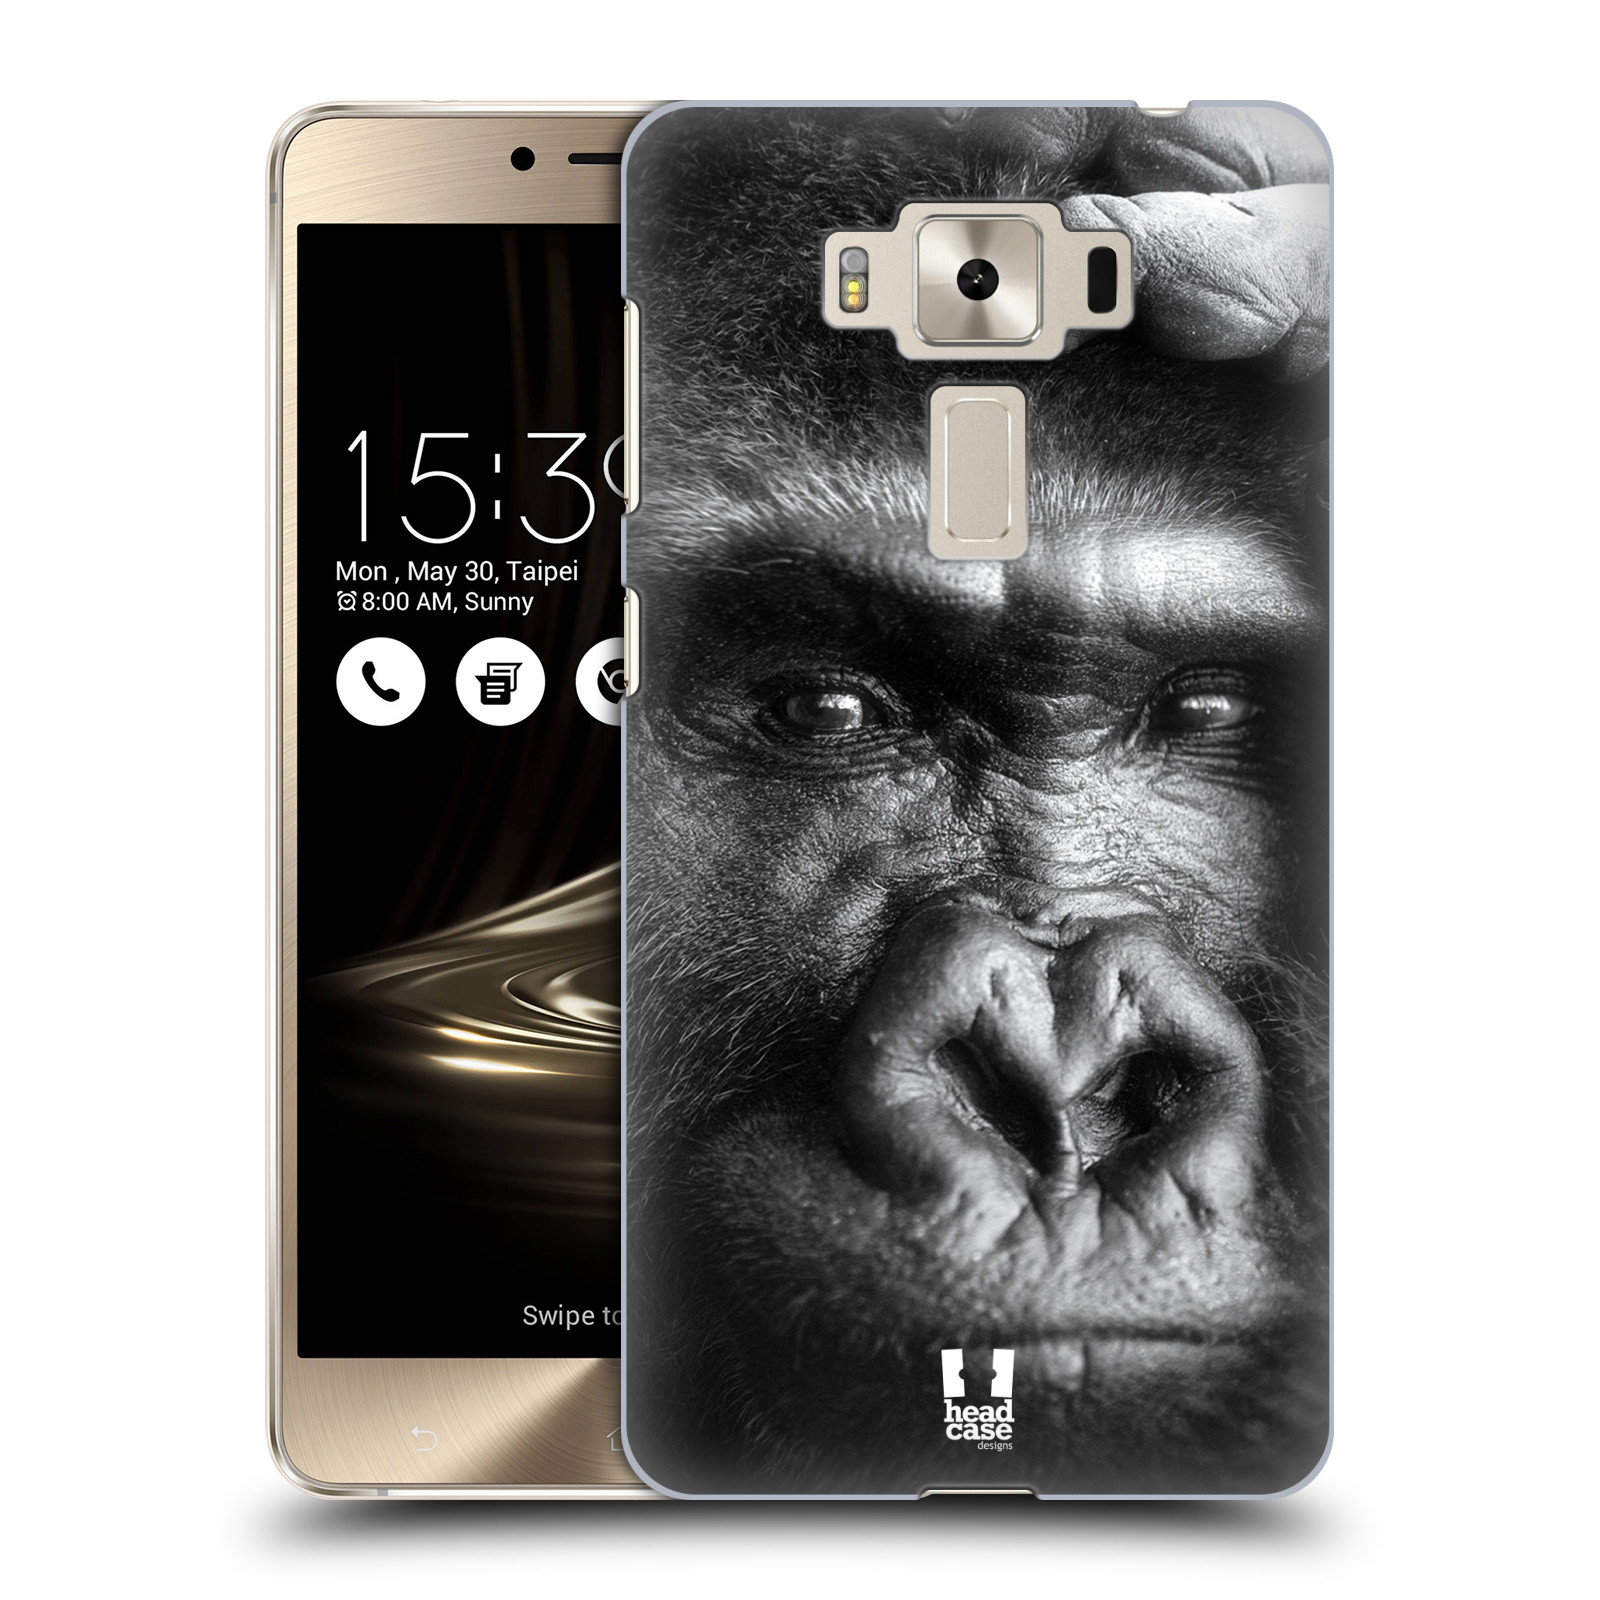 HEAD CASE plastový obal na mobil Asus Zenfone 3 DELUXE ZS550KL vzor Divočina, Divoký život a zvířata foto GORILA TVÁŘ